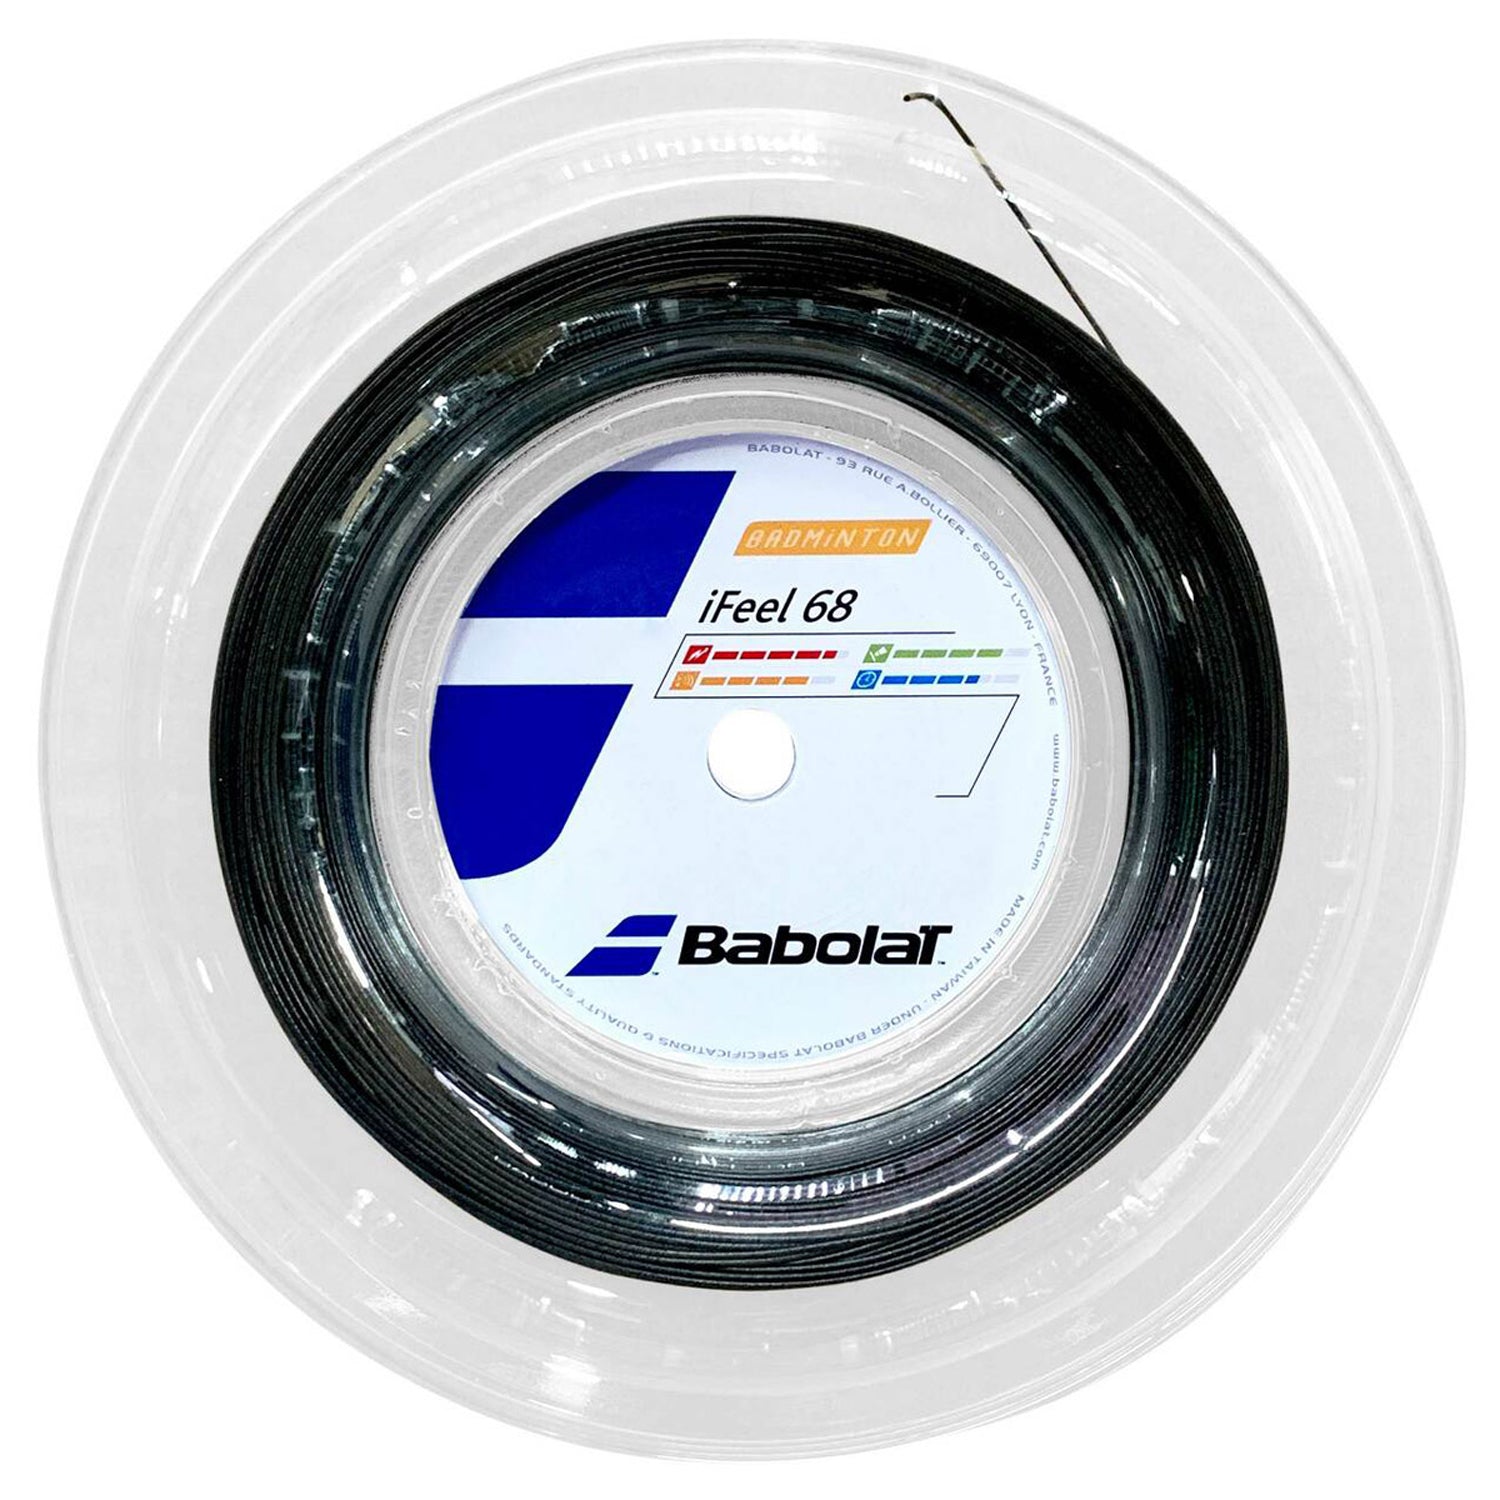 Babolat I Feel 68 Badminton String Reel (200M) - Best Price online Prokicksports.com